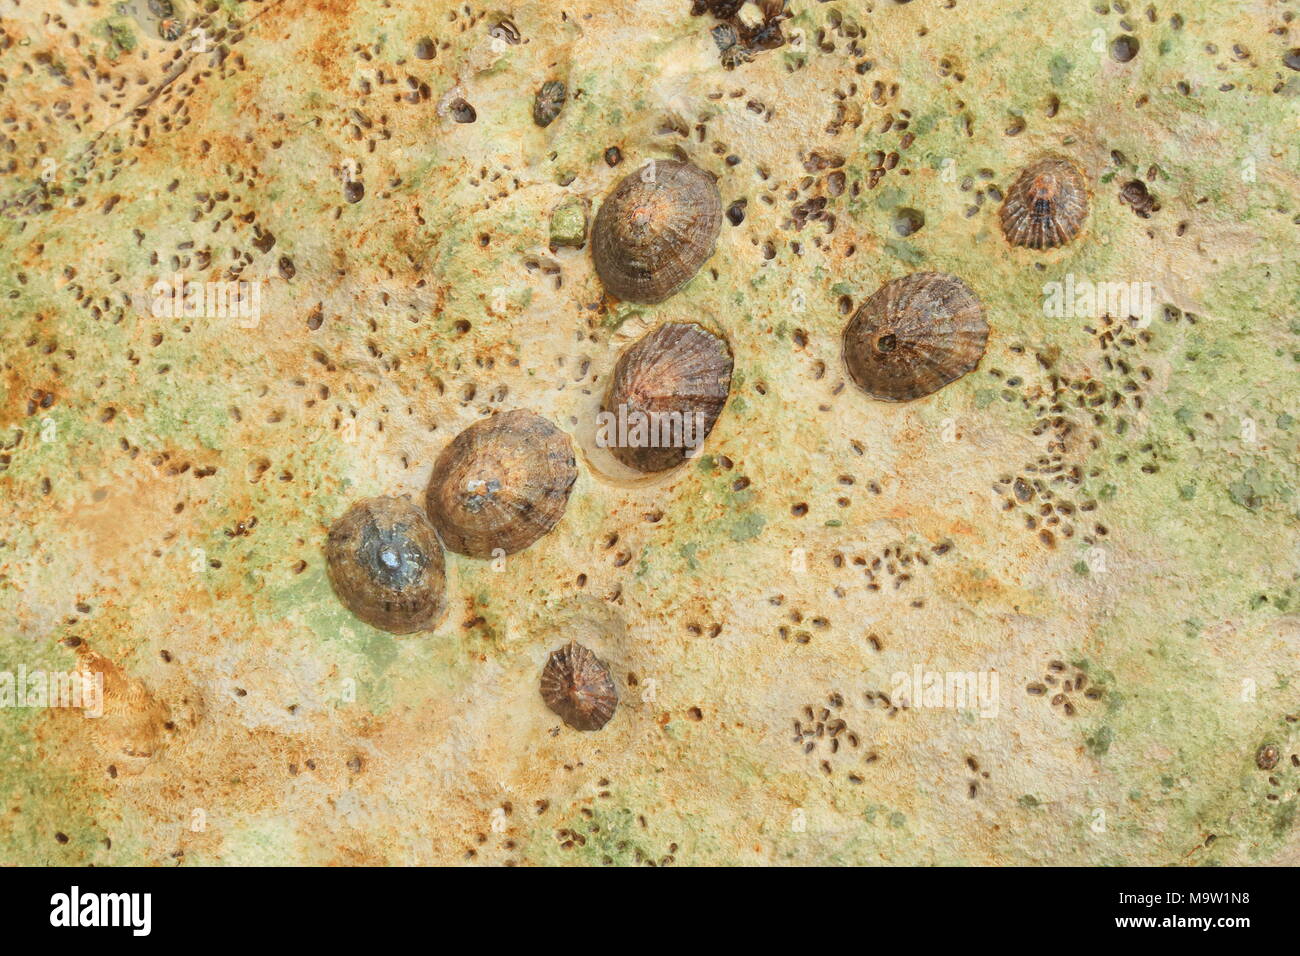 Grupo de lapa común (Patella vulgata) adjunta a la colorida roca durante la marea baja Foto de stock